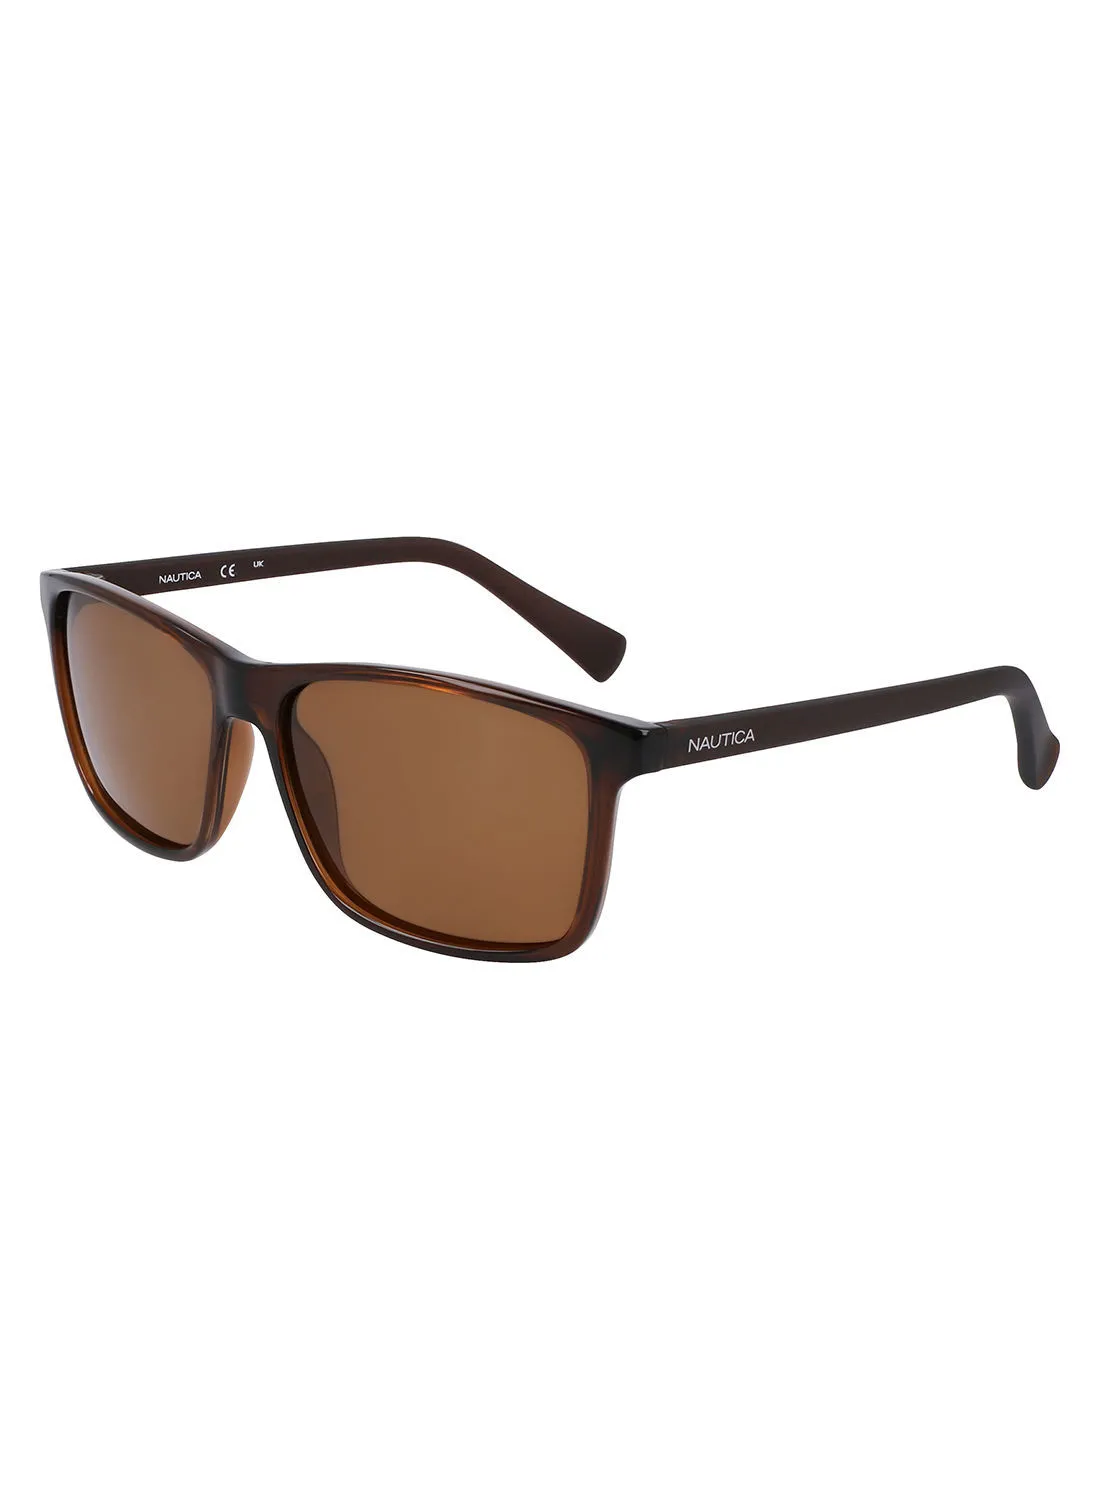 NAUTICA Men's Rectangular Sunglasses - N2246S-210-5815 - Lens Size: 58 Mm